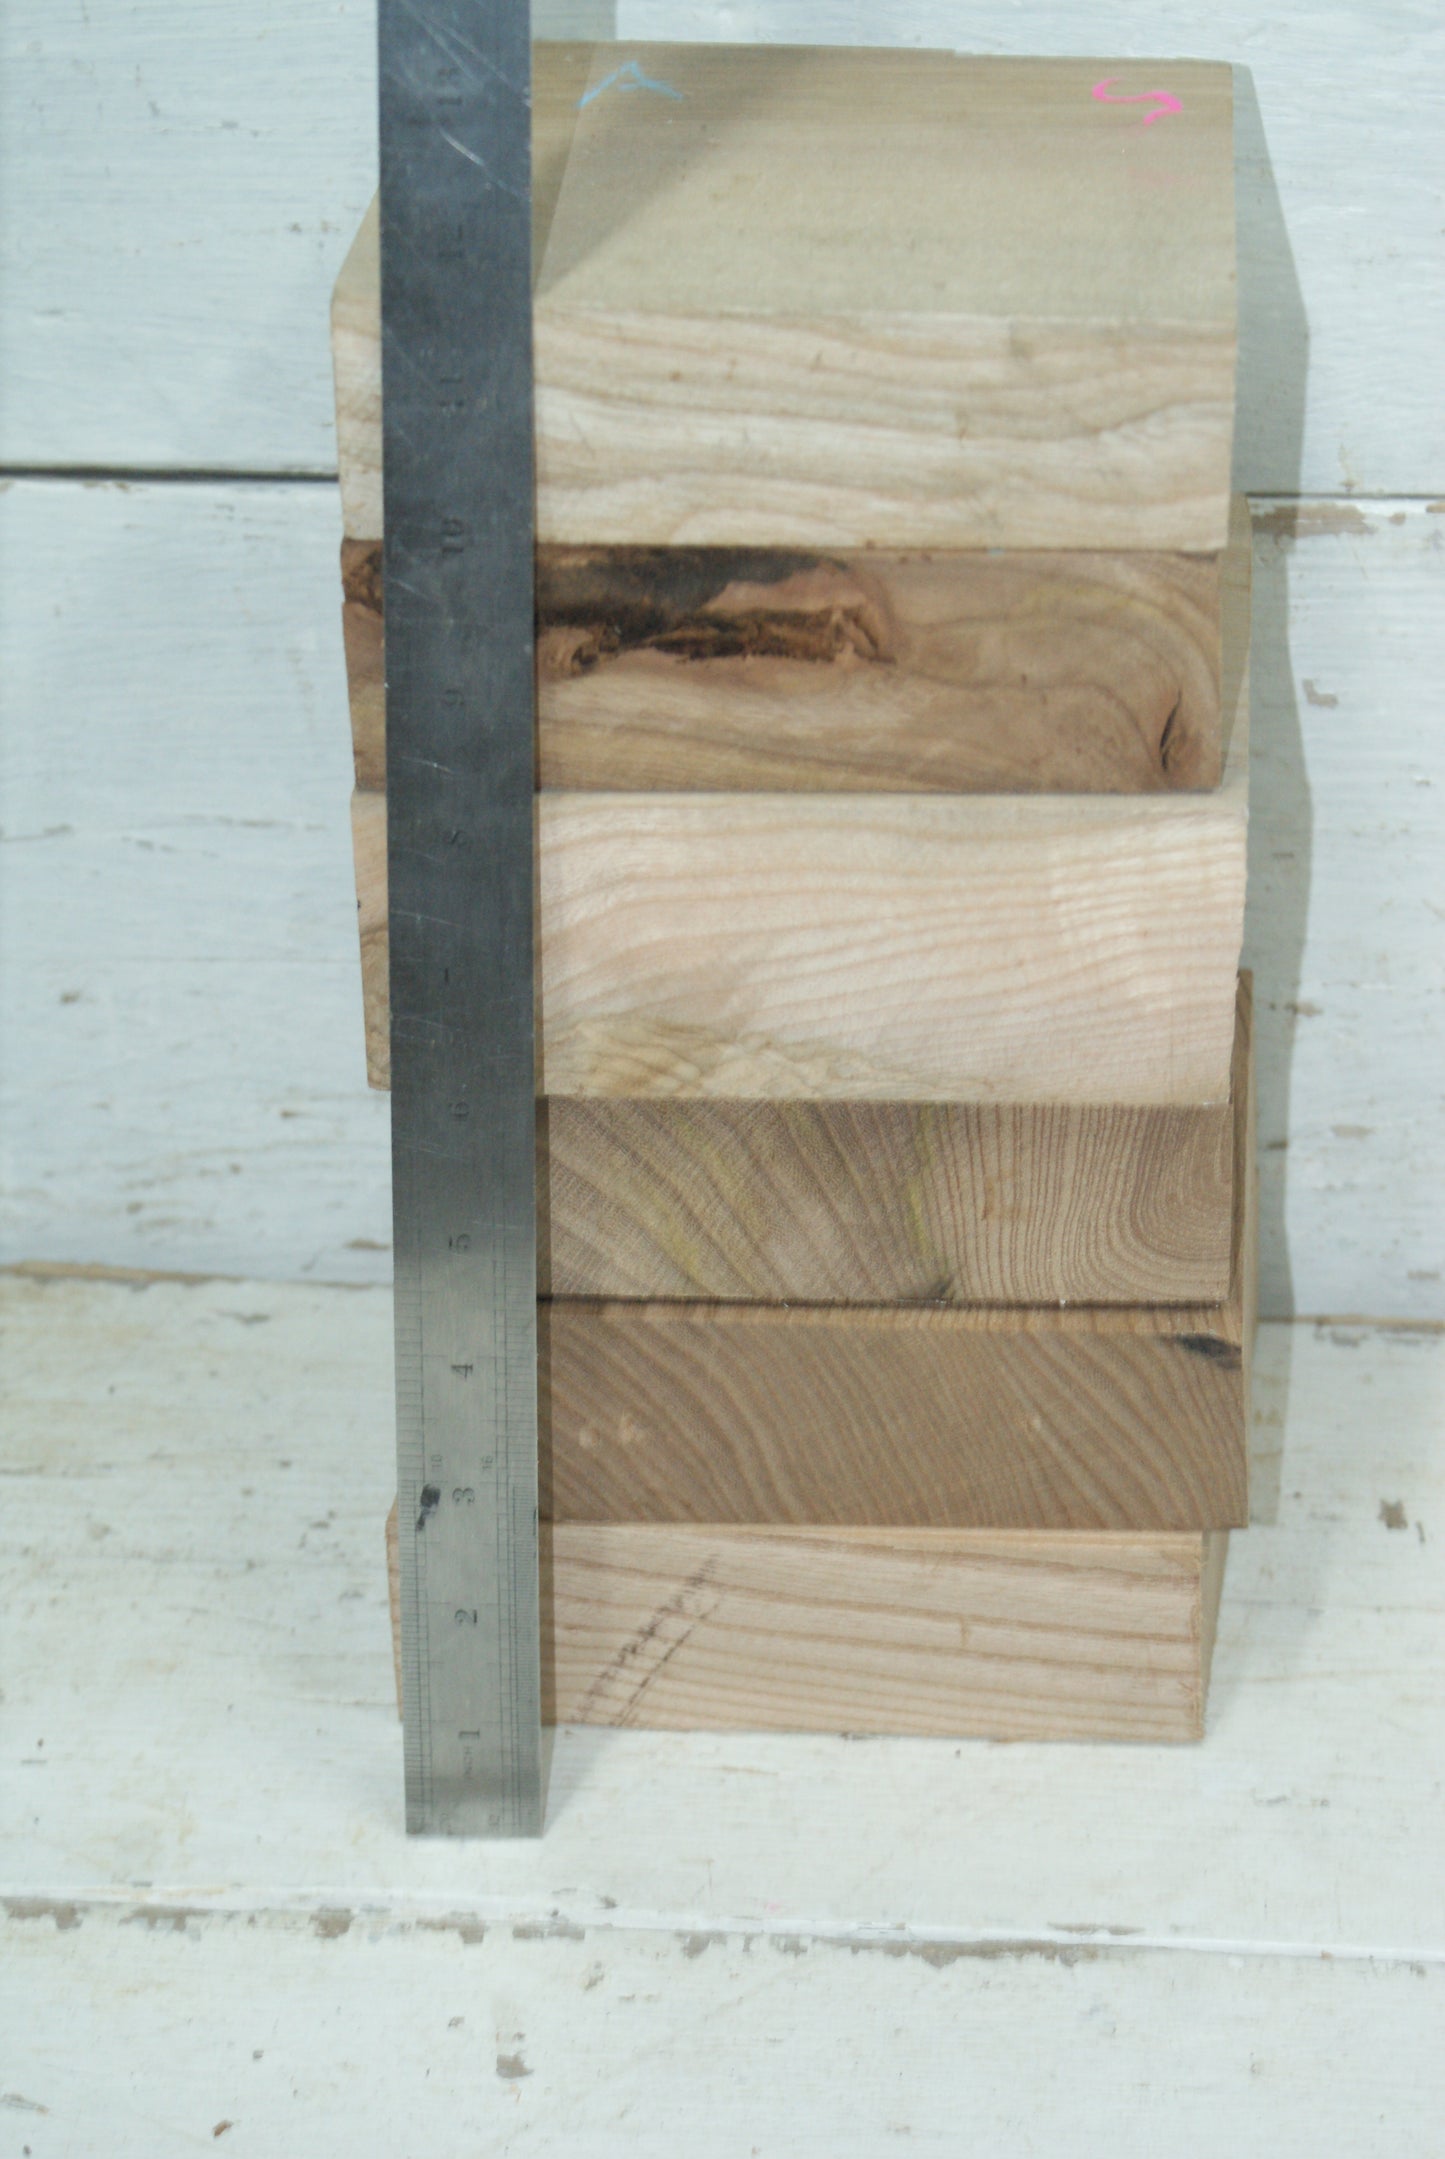 6 x Wood Turning Blanks  6x6 x 2"  A Grade   (005)